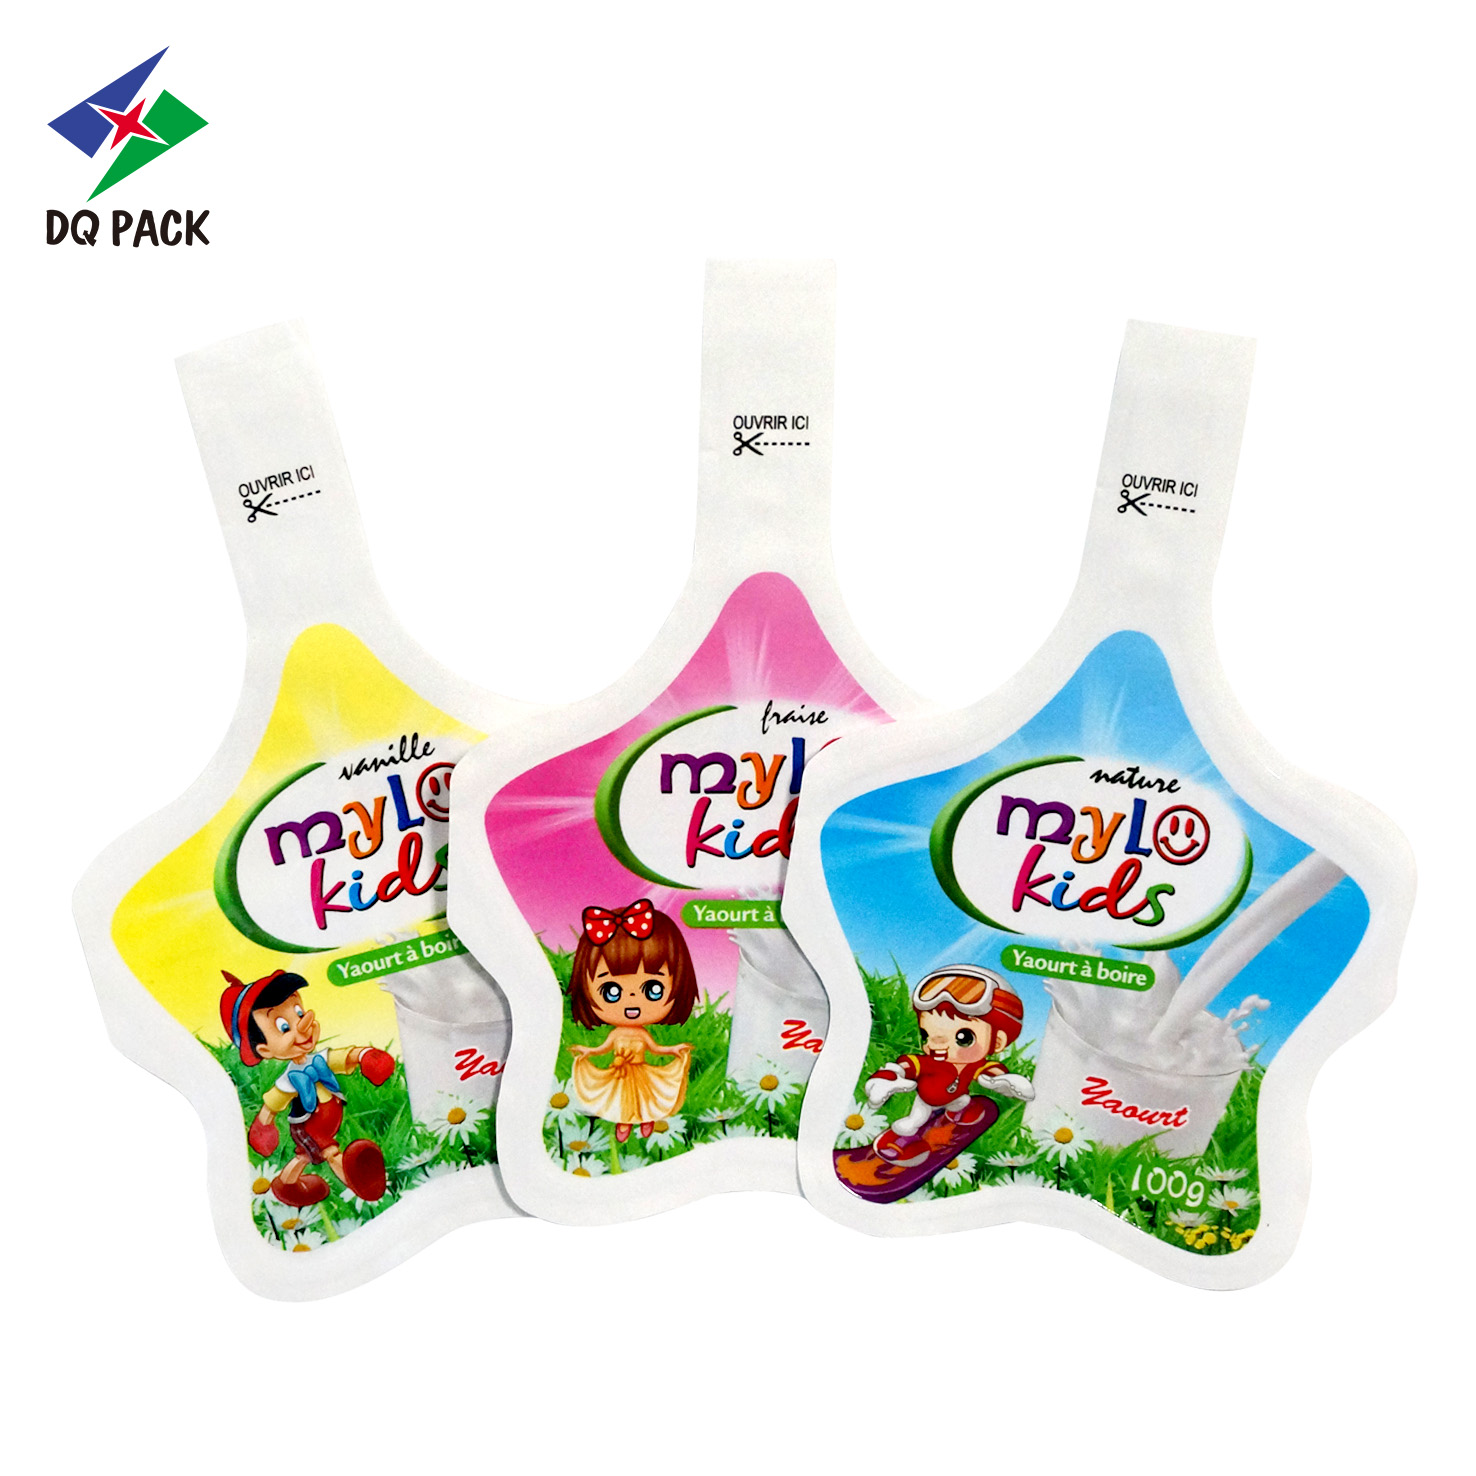 DQpack customized logo printed plastic packaging bag plastic bag shaped injection bag for Yogurt Milk